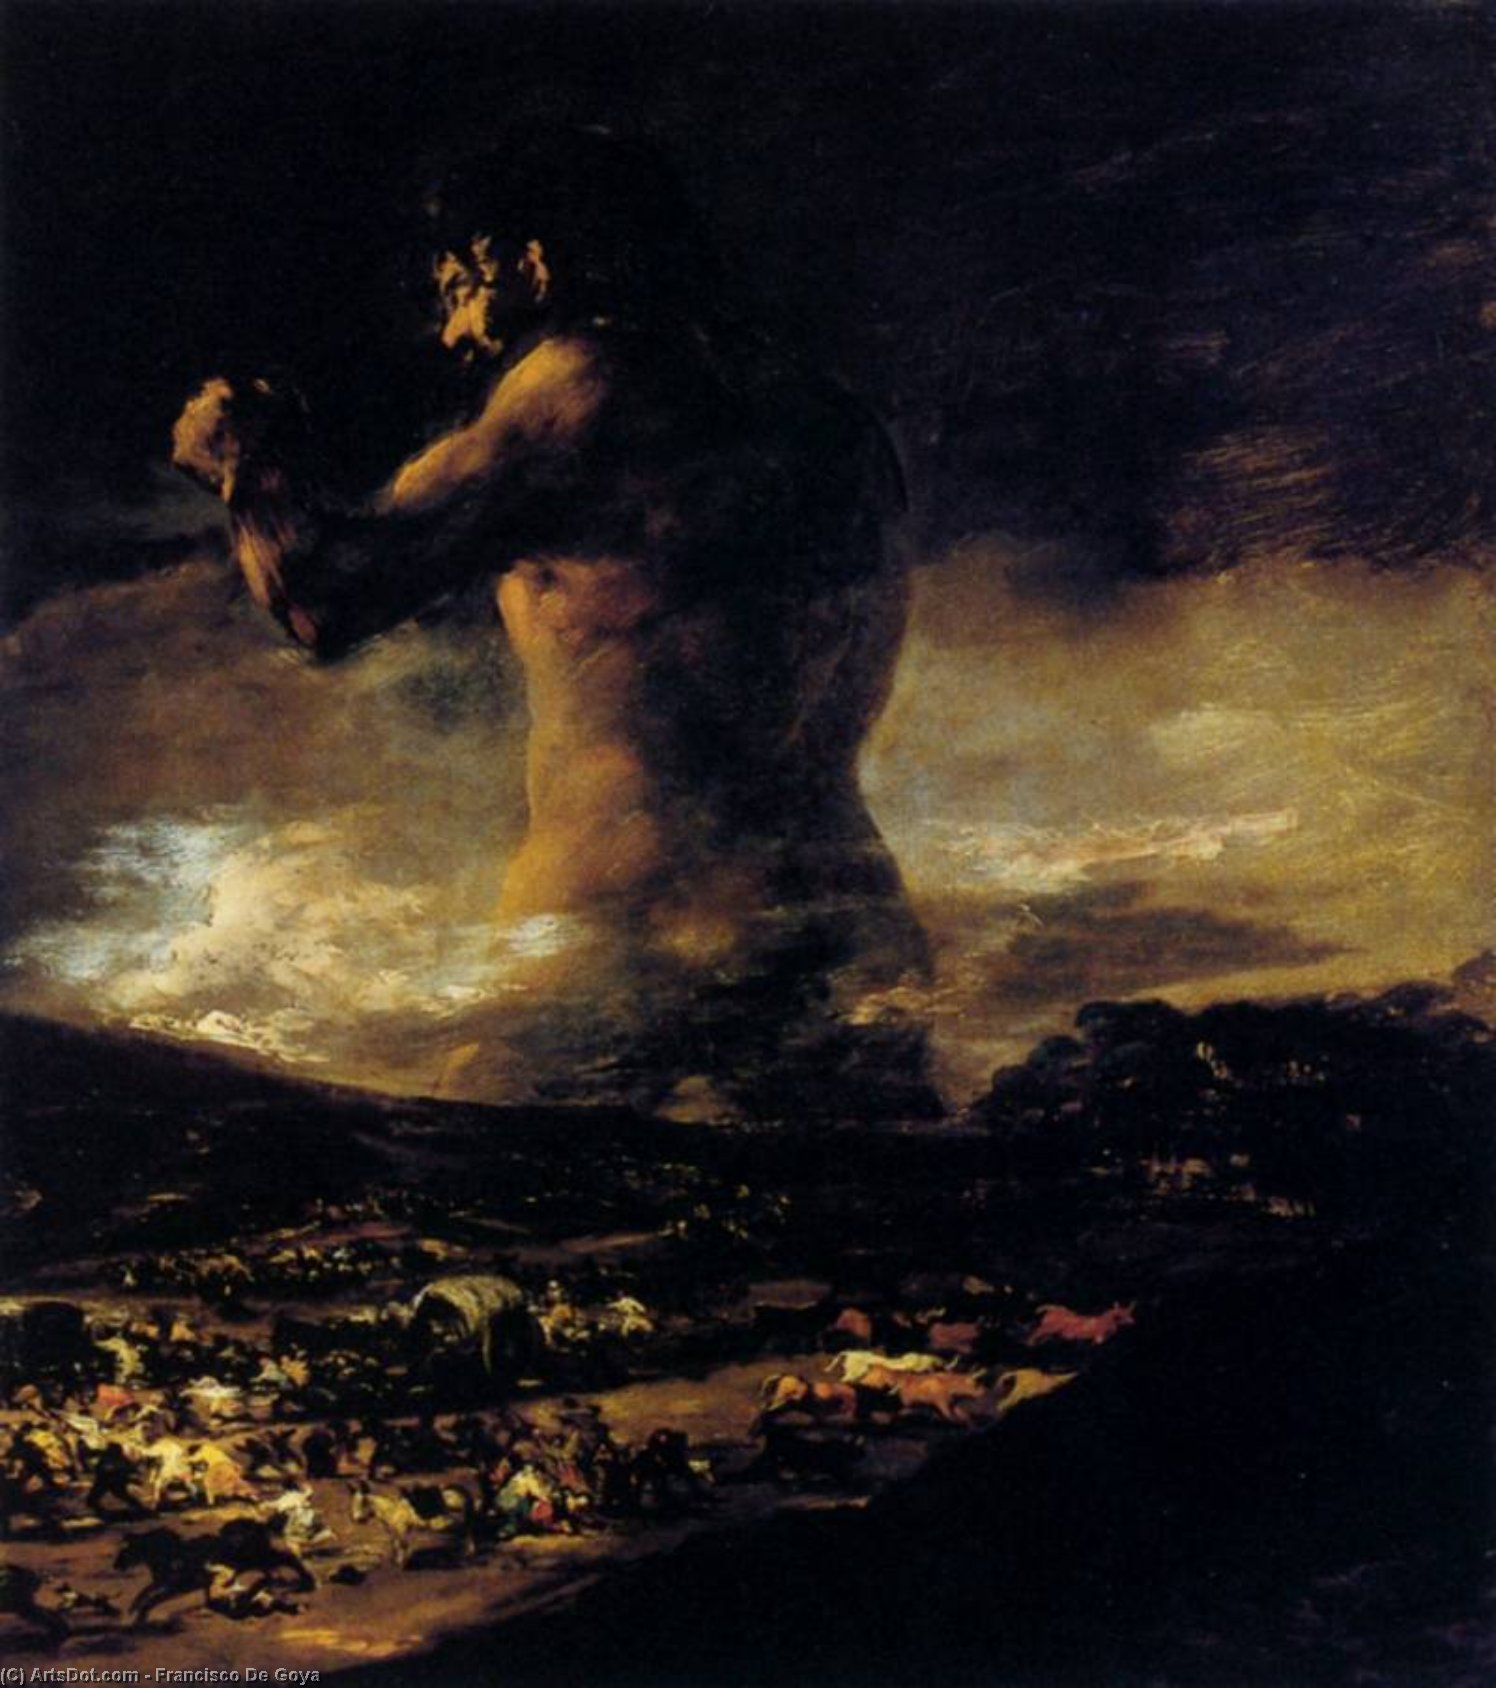 WikiOO.org - Güzel Sanatlar Ansiklopedisi - Resim, Resimler Francisco De Goya - the colossus